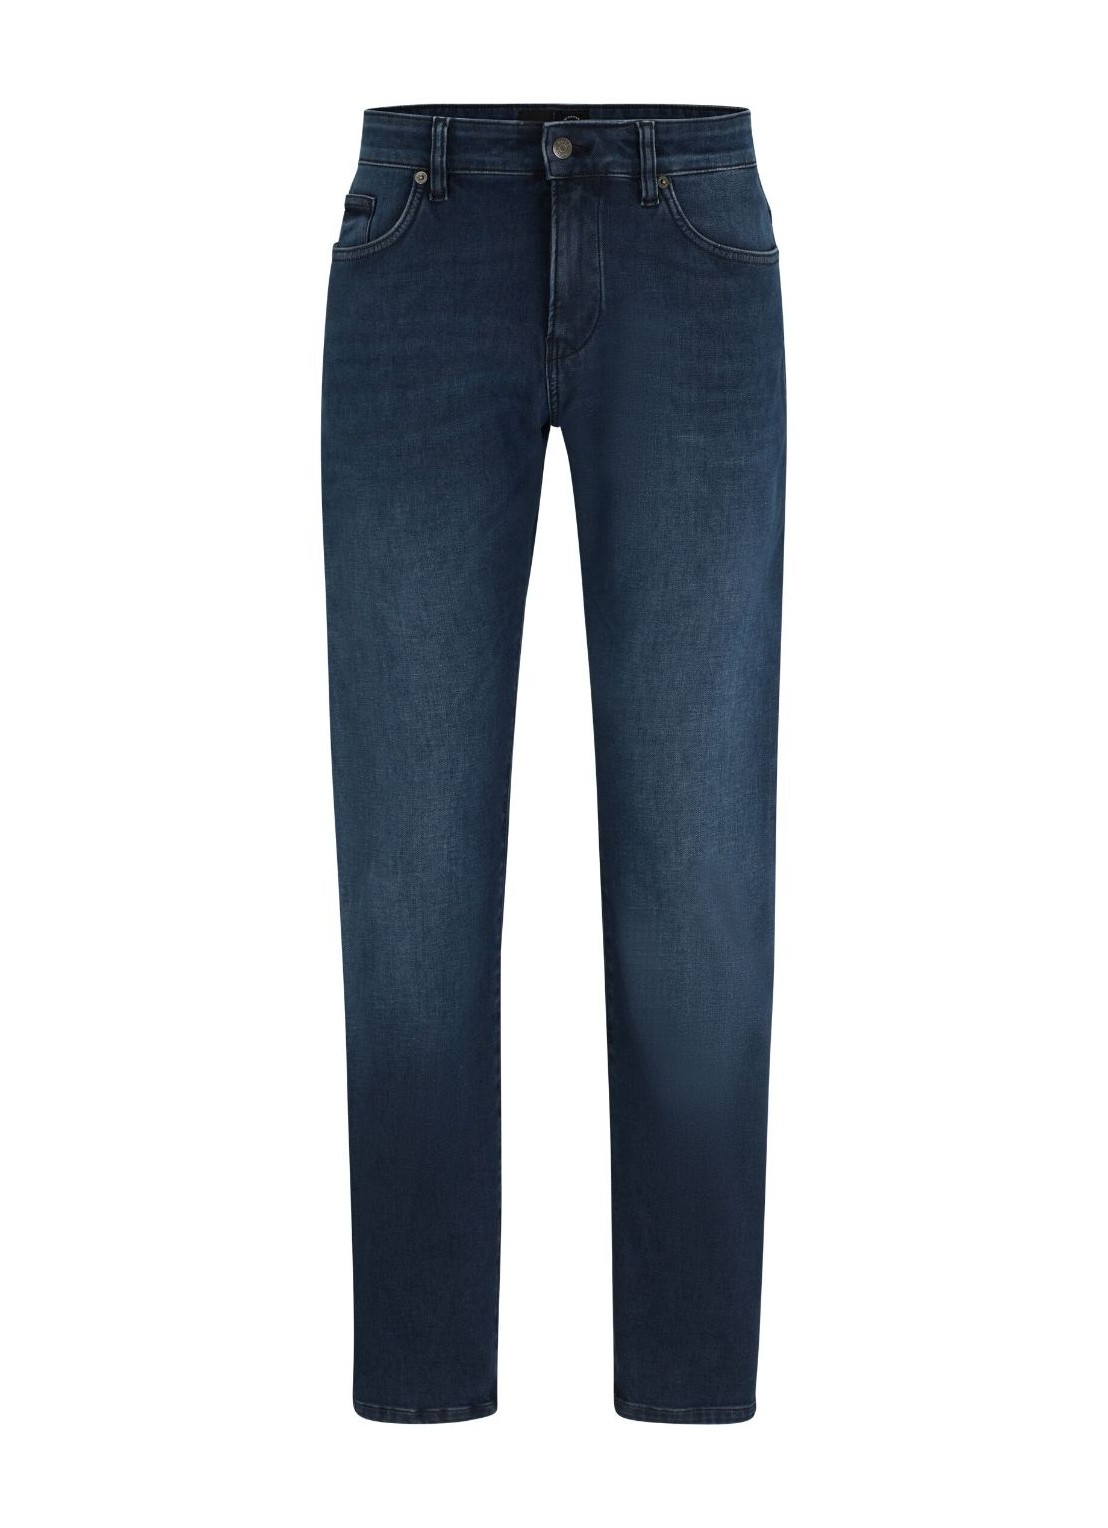 Pantalon jeans boss denim man p-delaware 3-1 50508121 421 talla 32
 